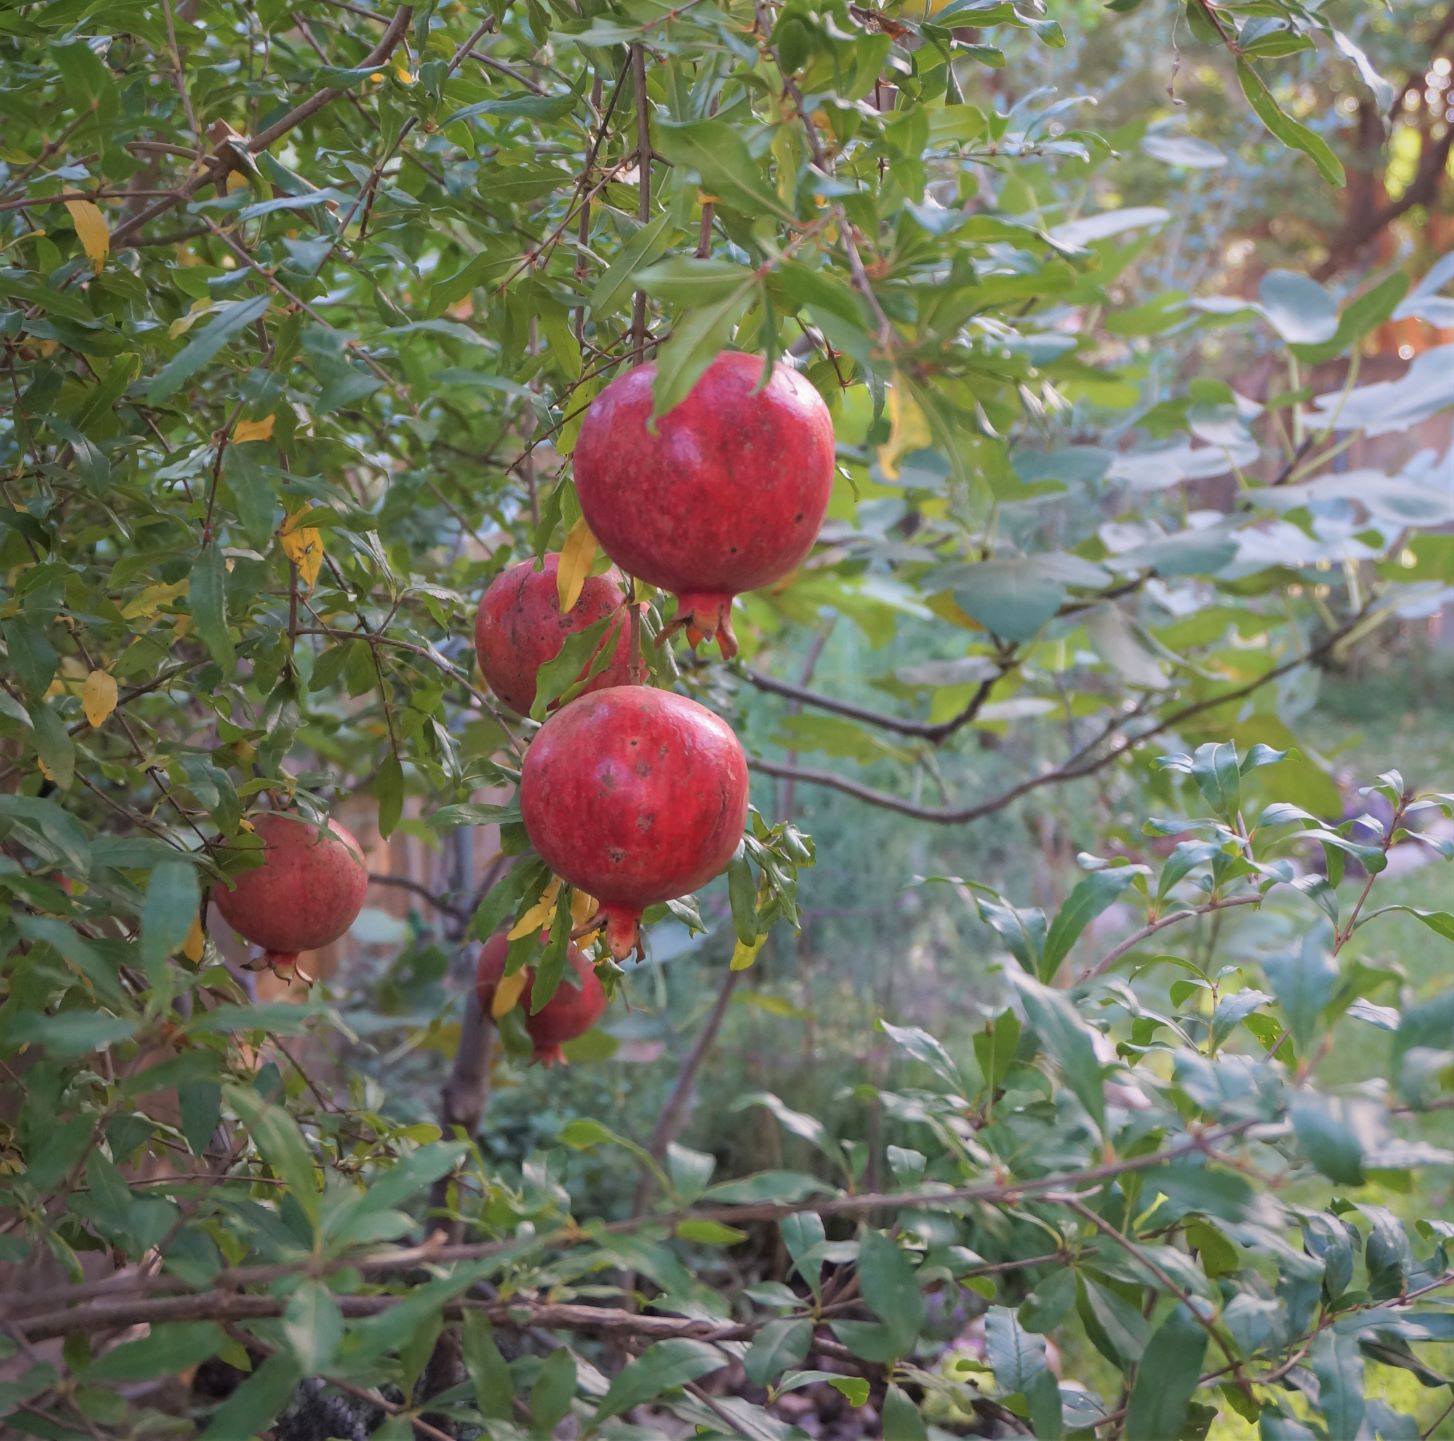 ©2020 Shelley S. Cramm pomegranates on a backyard tree